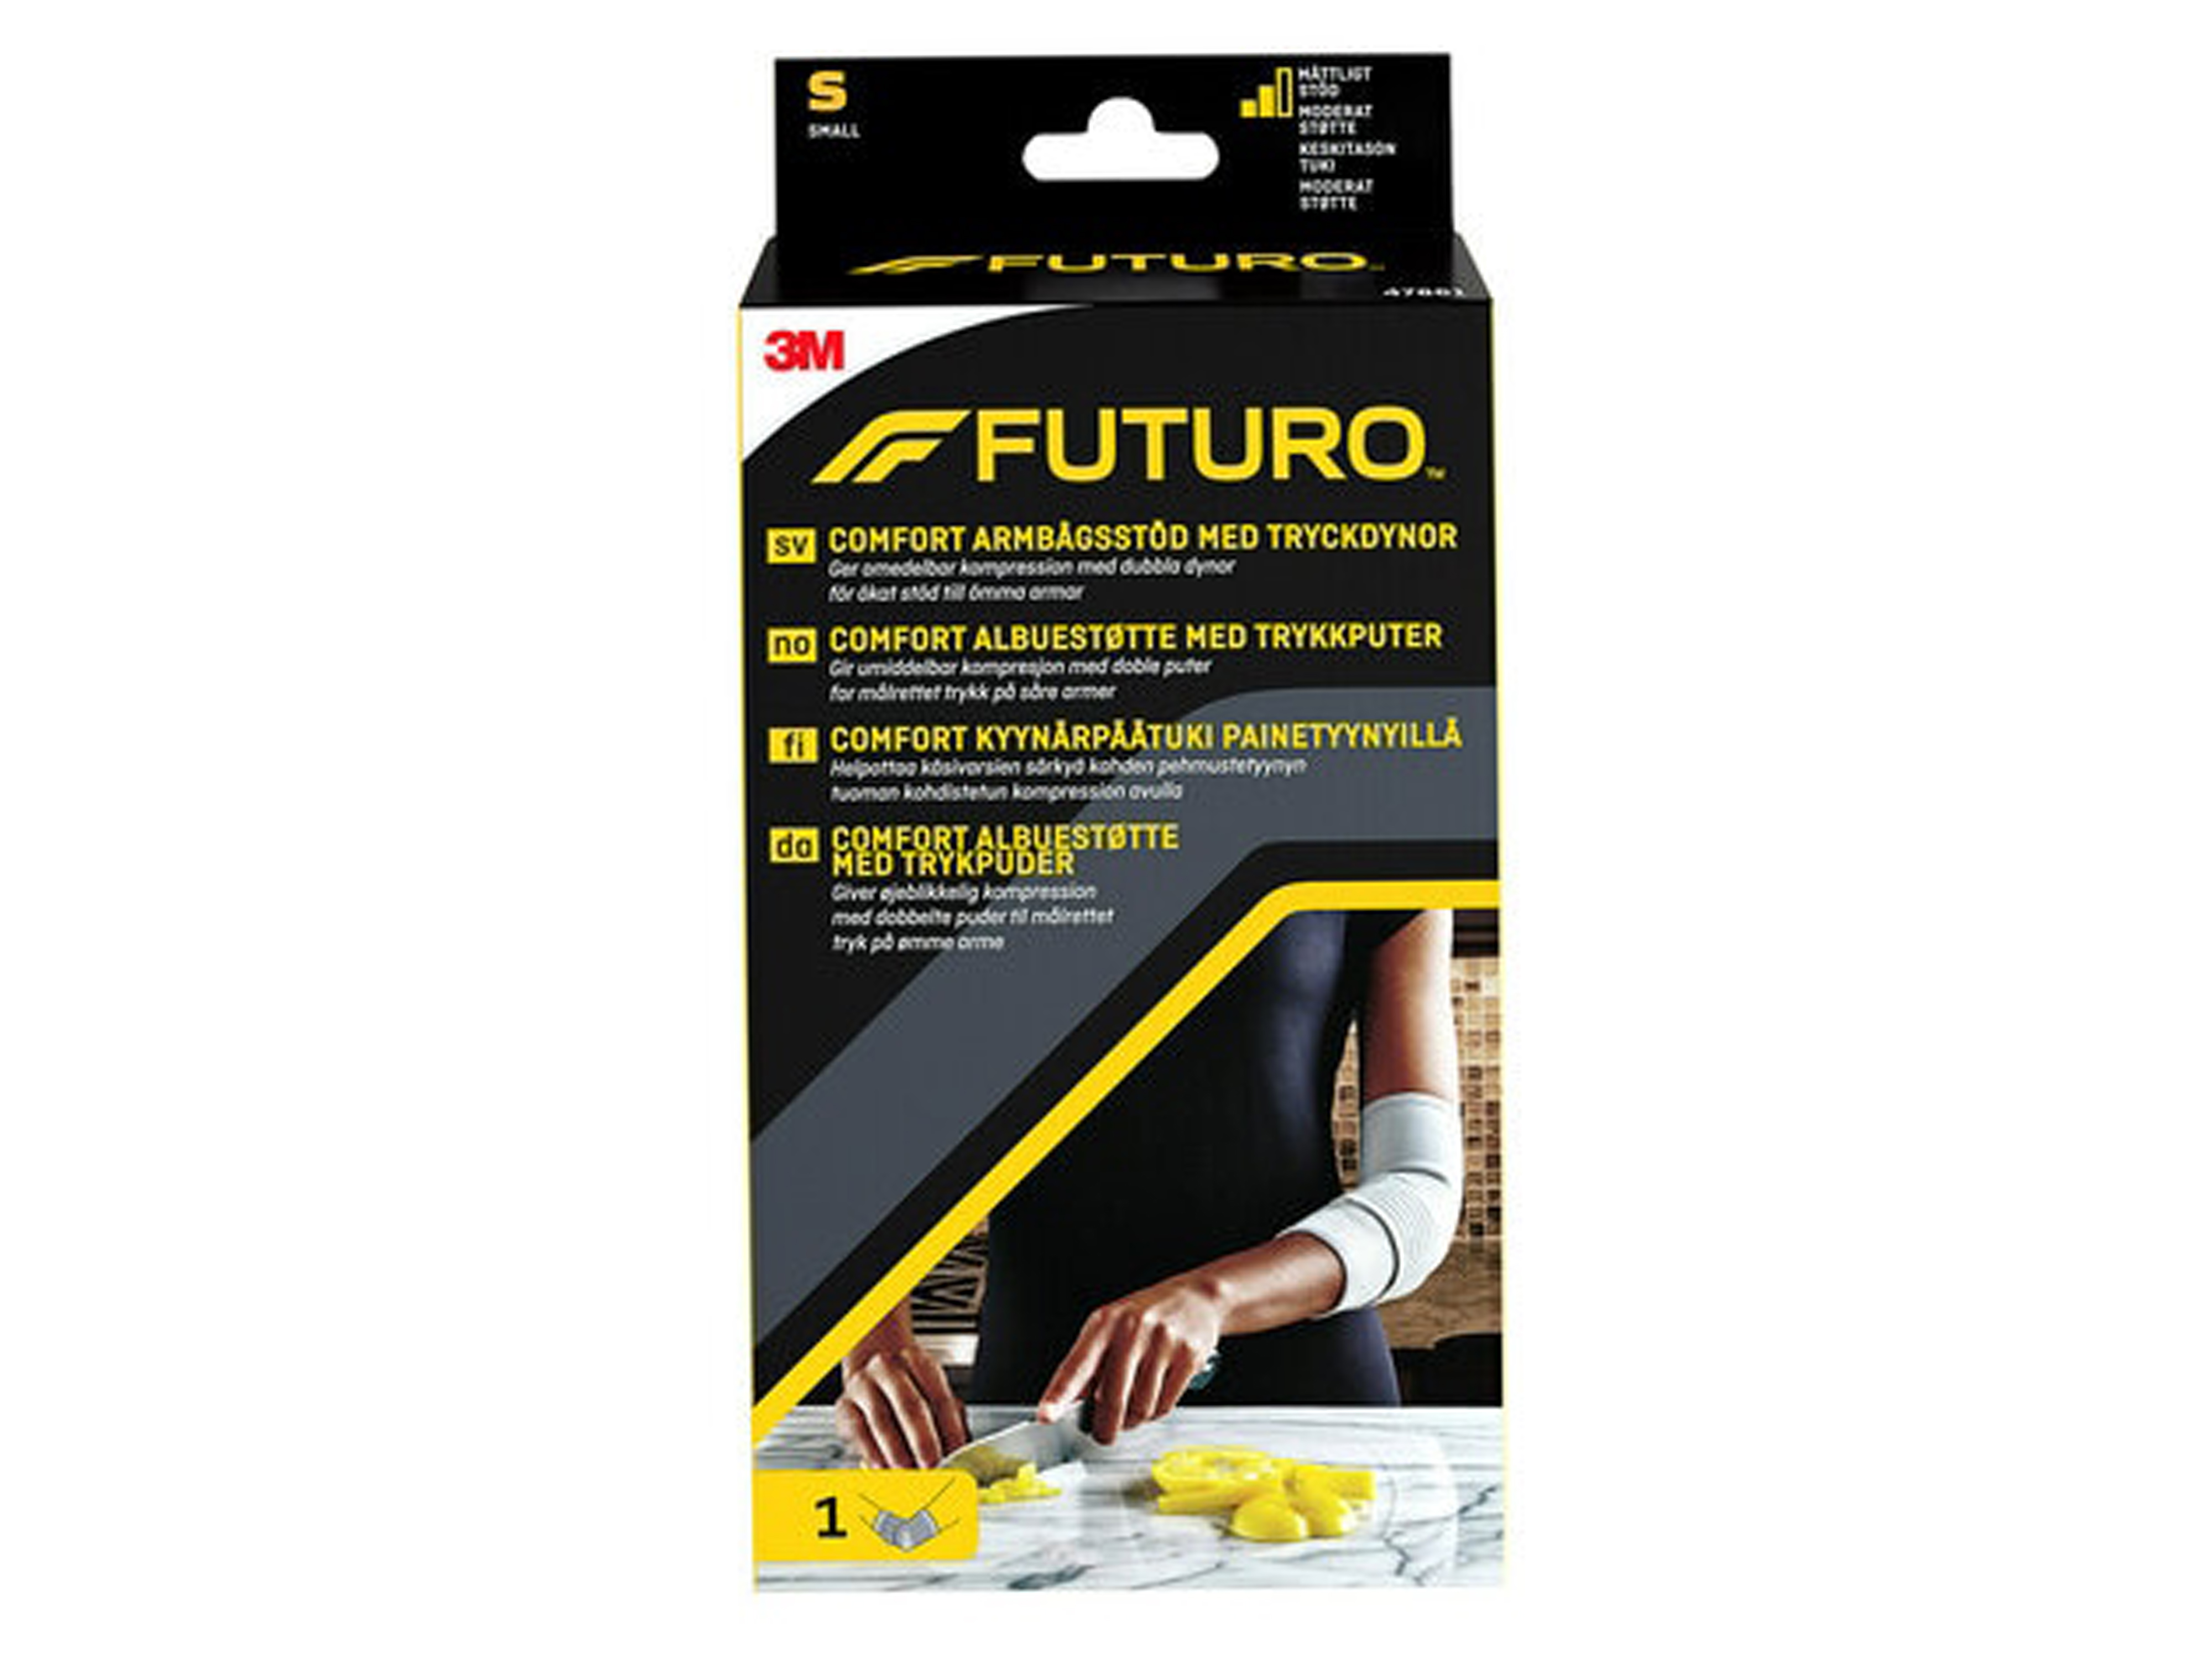 Futuro Comfort albuestøtte med trykkputer, Small, 1 stk.